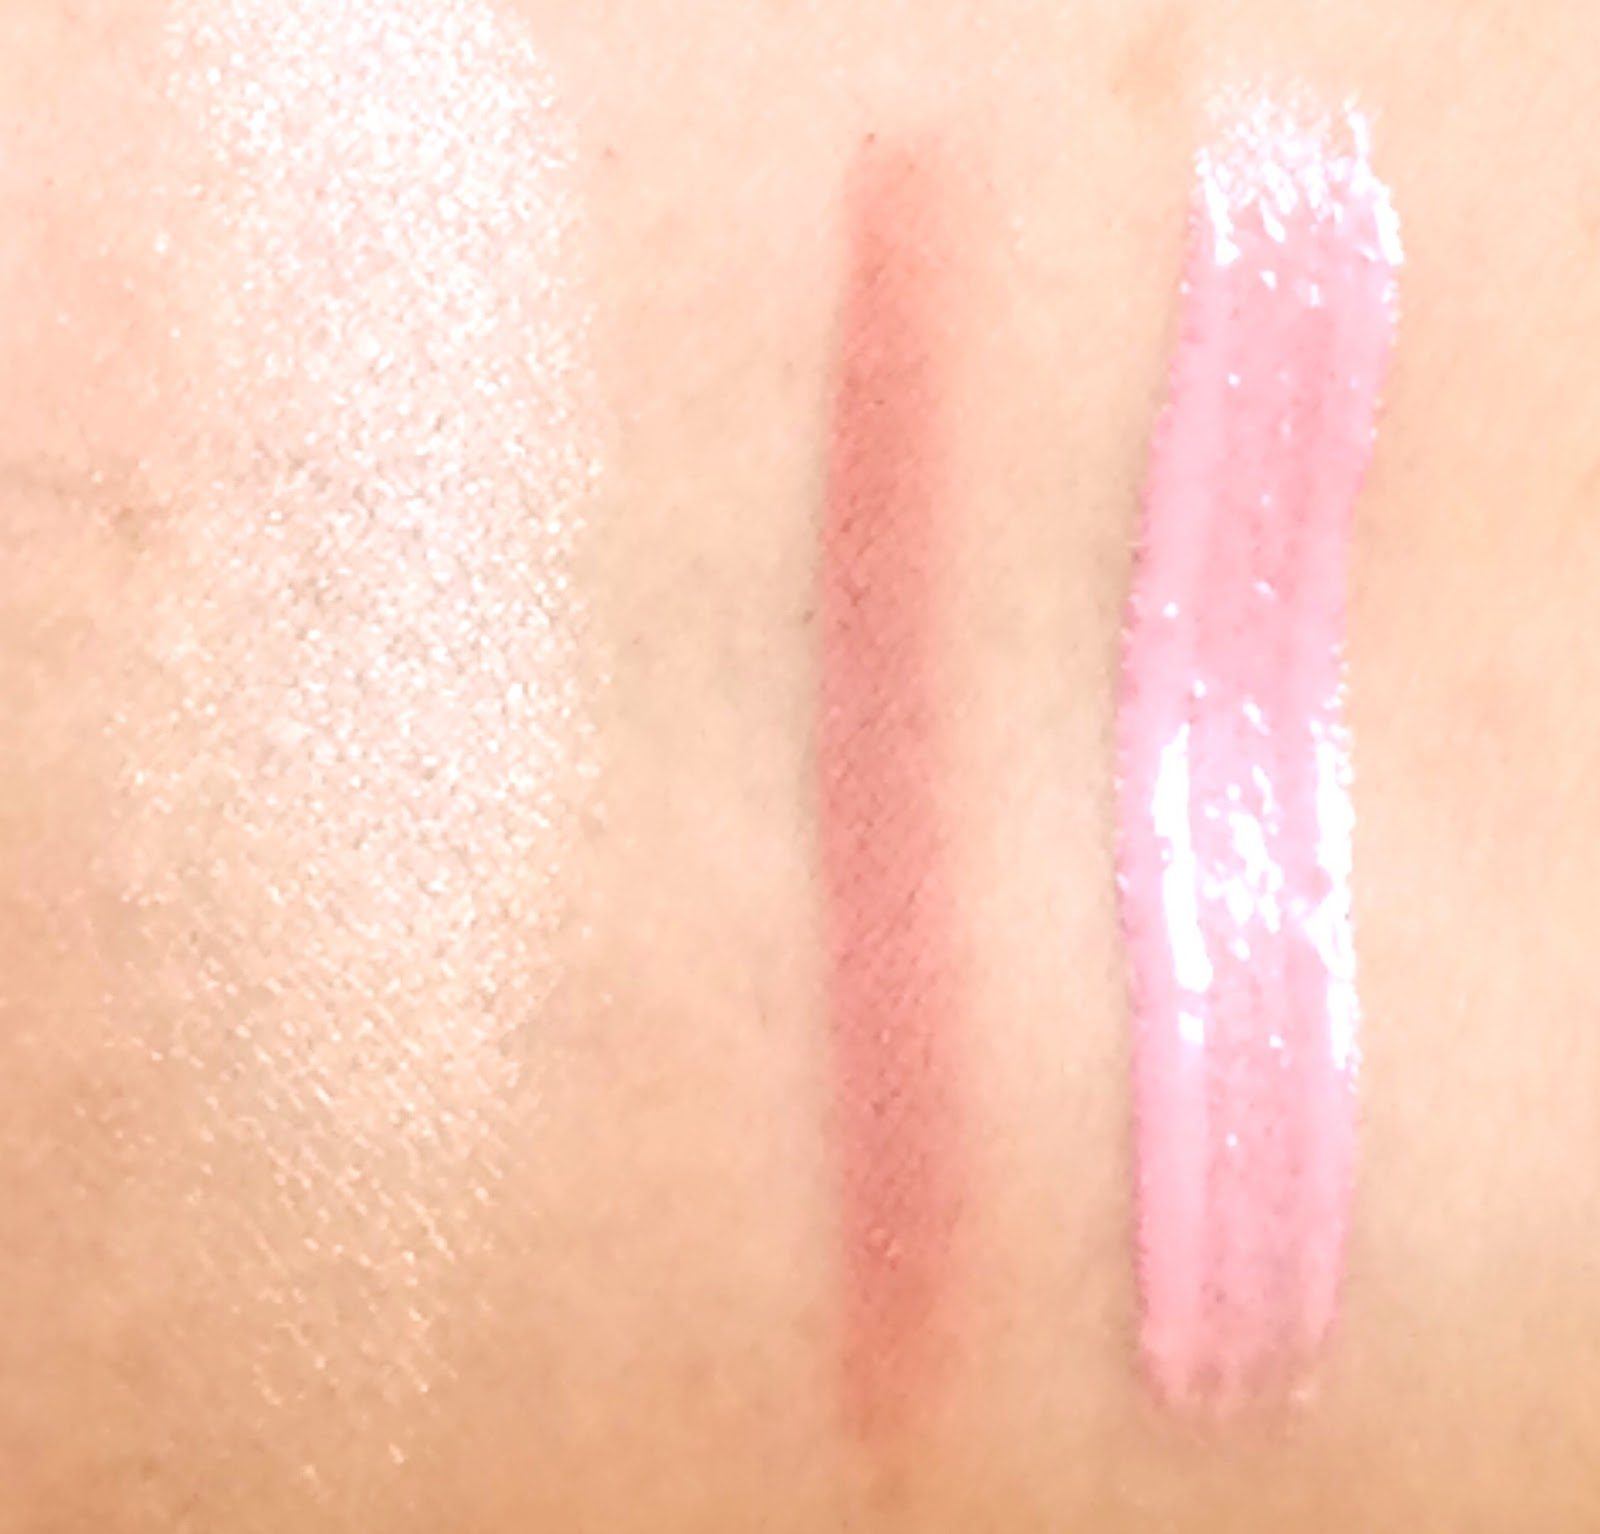 Natasha Denona All Over Face & Body Glow 01 Light,  Lip Glaze Rosy Nude, Lip Liner Pencil L1 Light Natural. Swatches